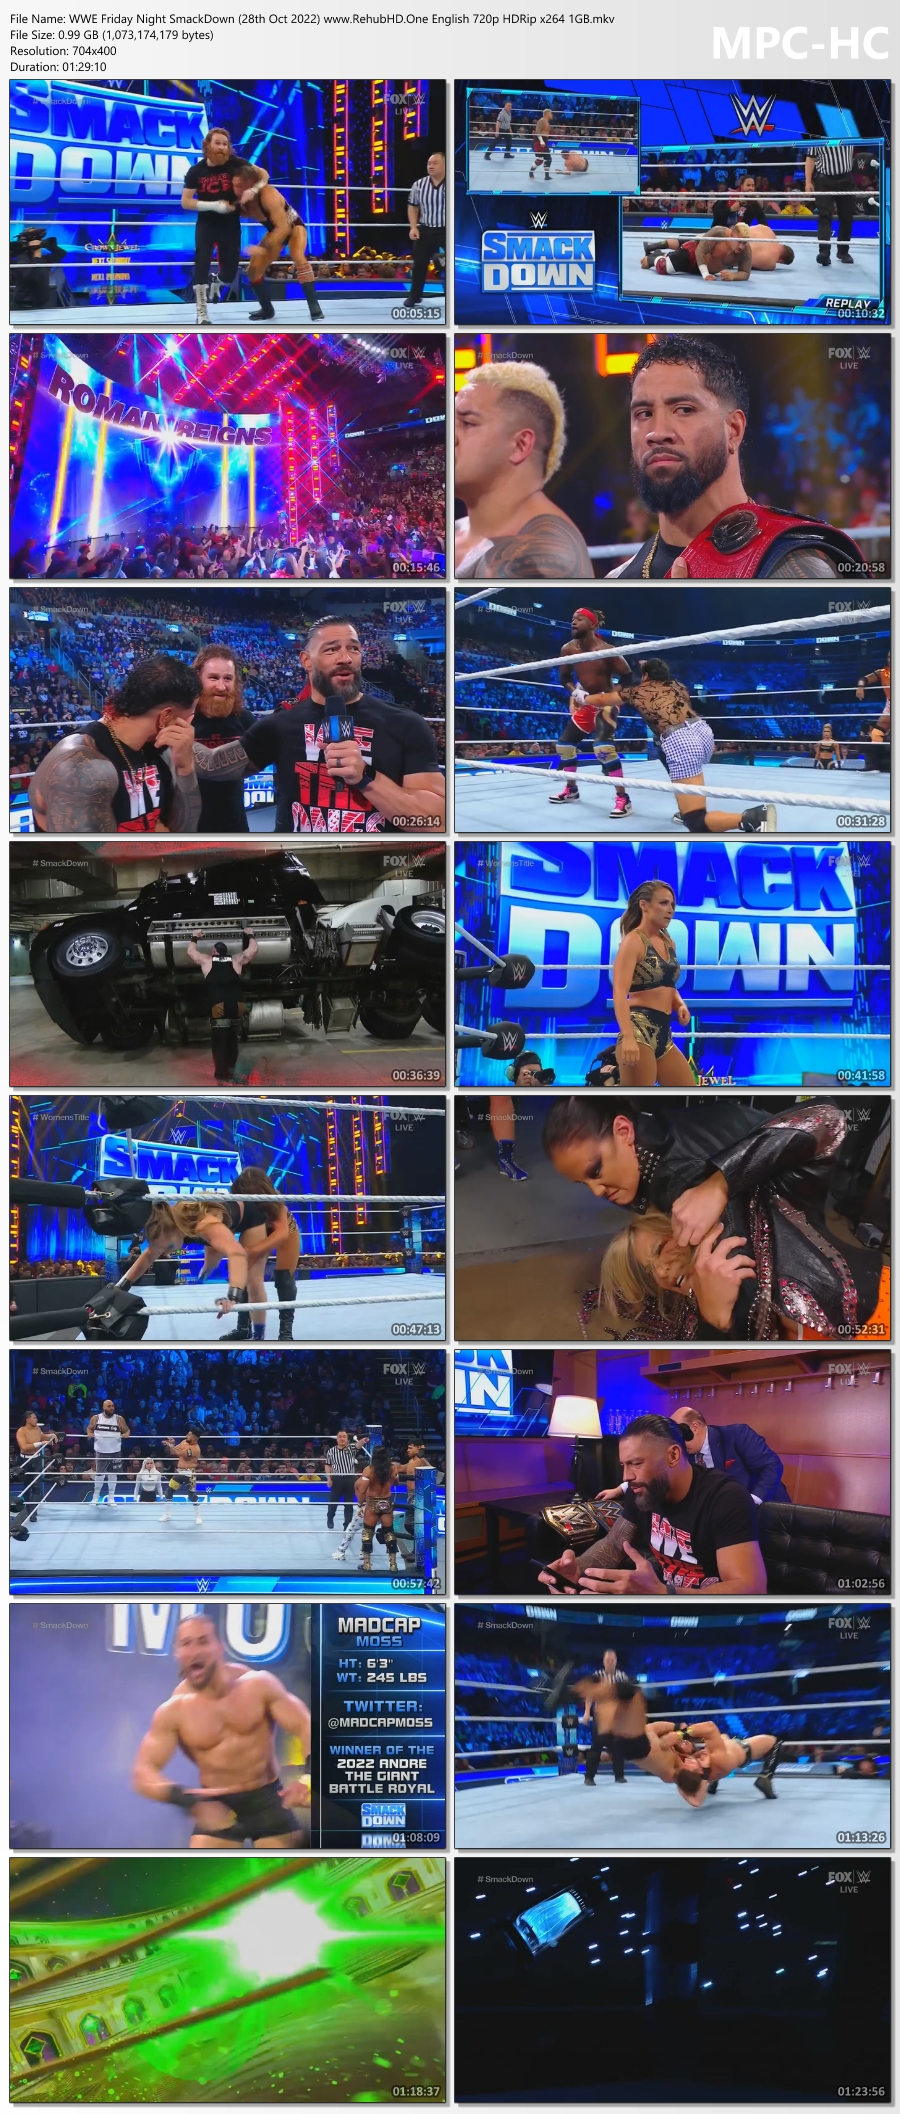 WWE Friday Night SmackDown (28th Oct 2022) www.RehubHD.One English 720p HDRip x264 1GB.mkv thumbs